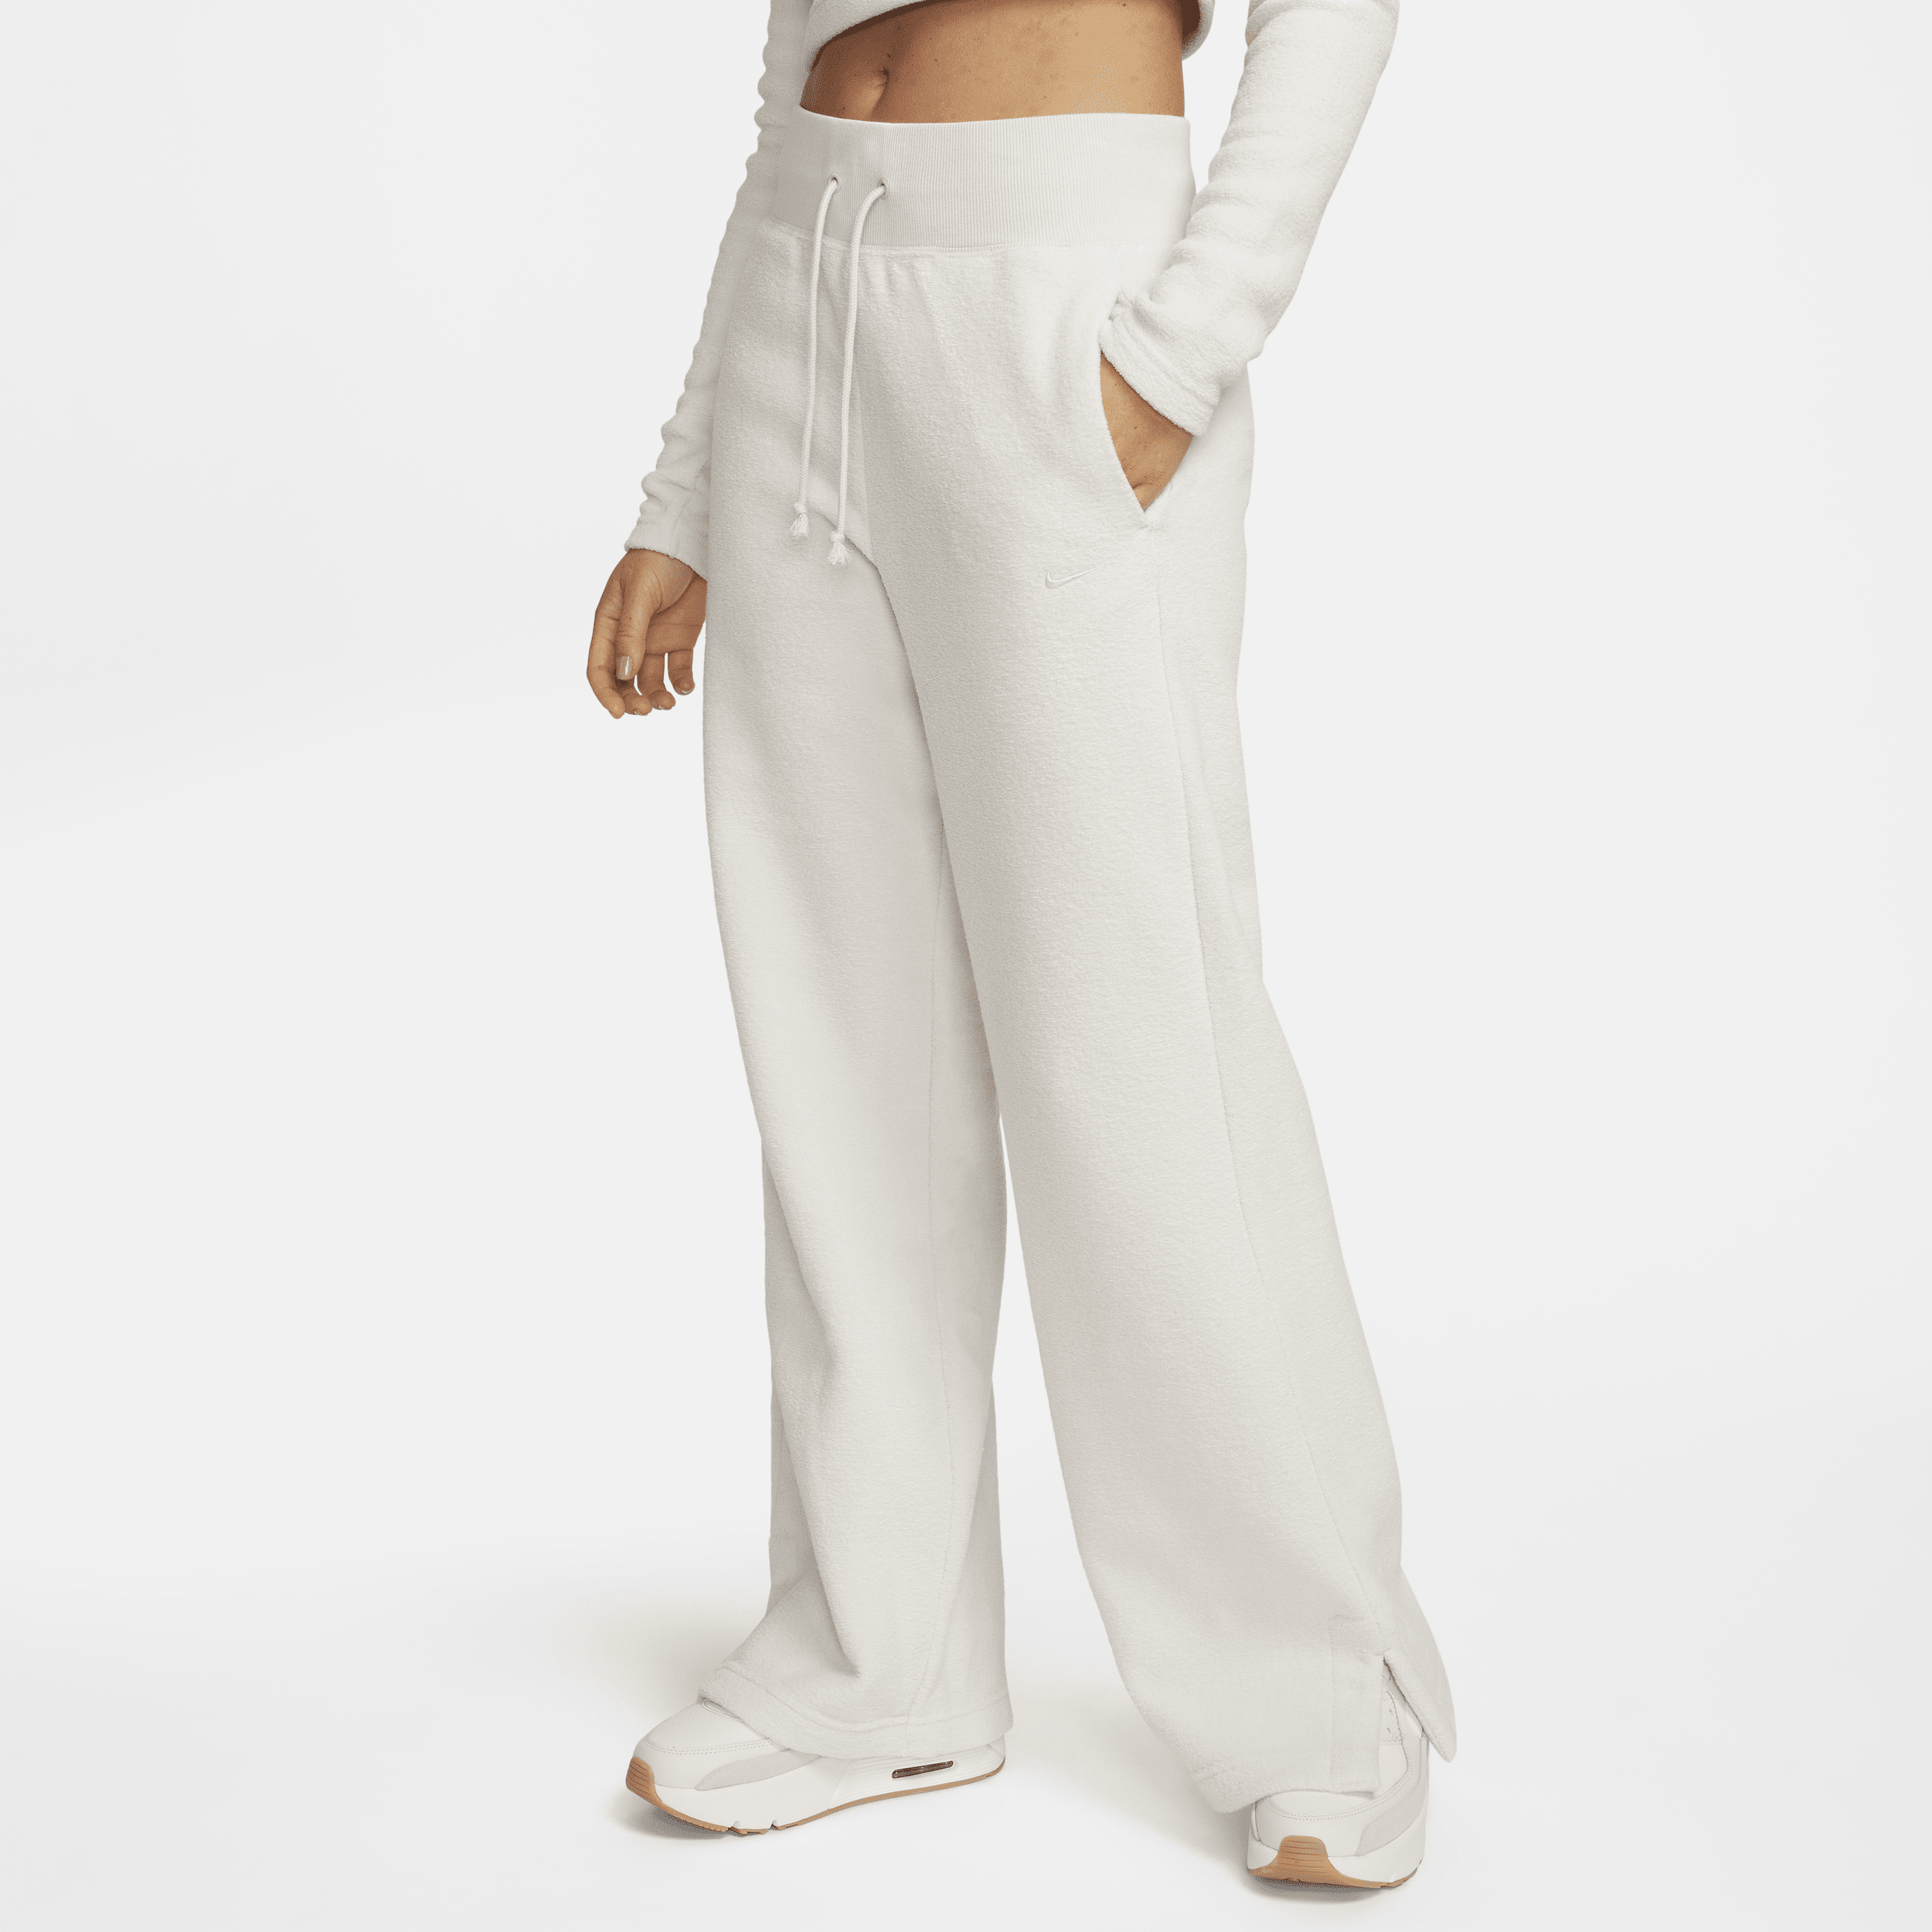 Pantaloni confortevoli in fleece a gamba larga e vita alta Nike Sportswear Phoenix Plush – Donna - Marrone